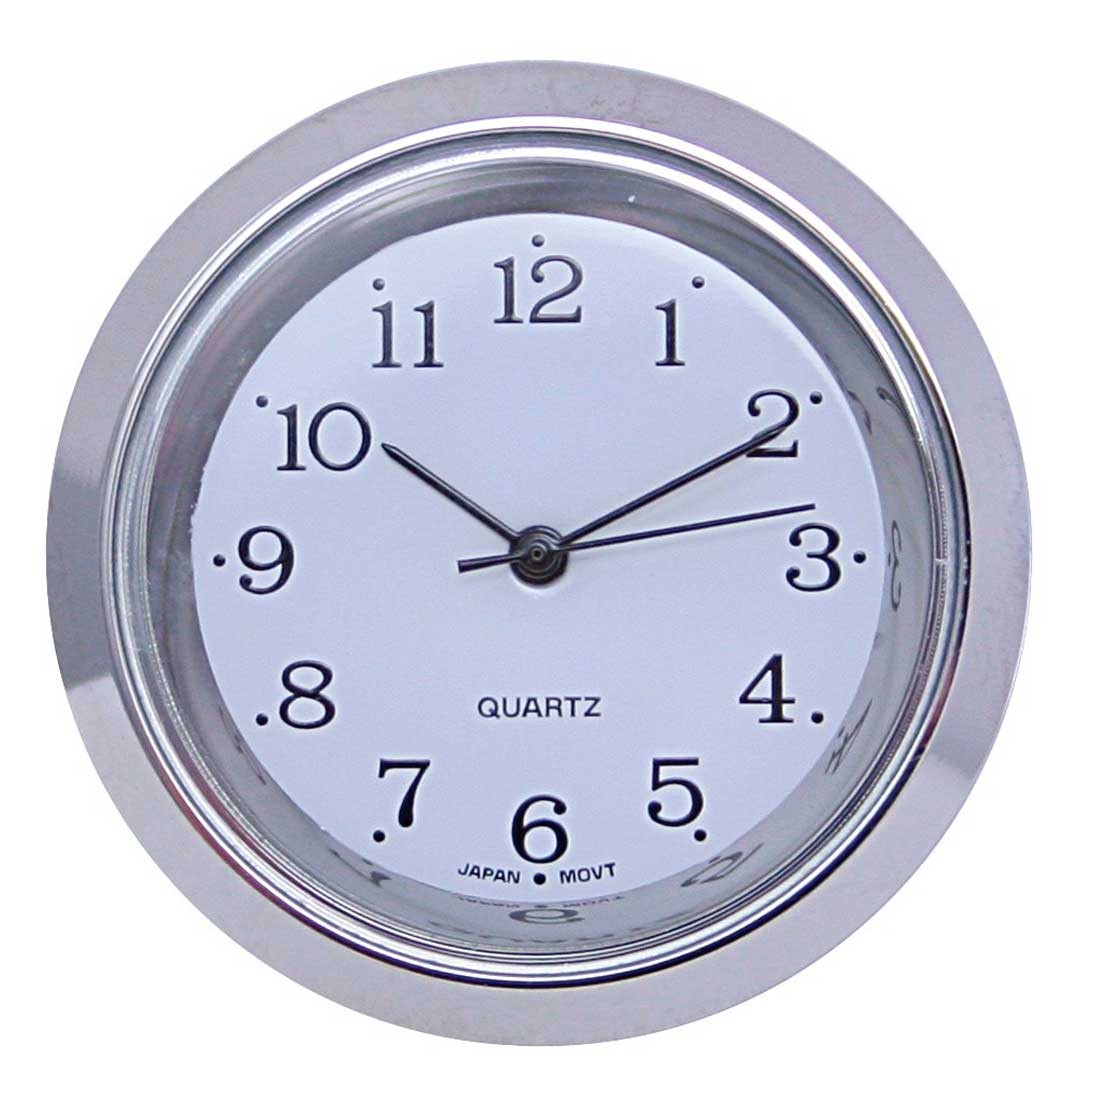 Clock Inserts 35mm (1 3/8") Chrome Bezel, White Arabic Dial